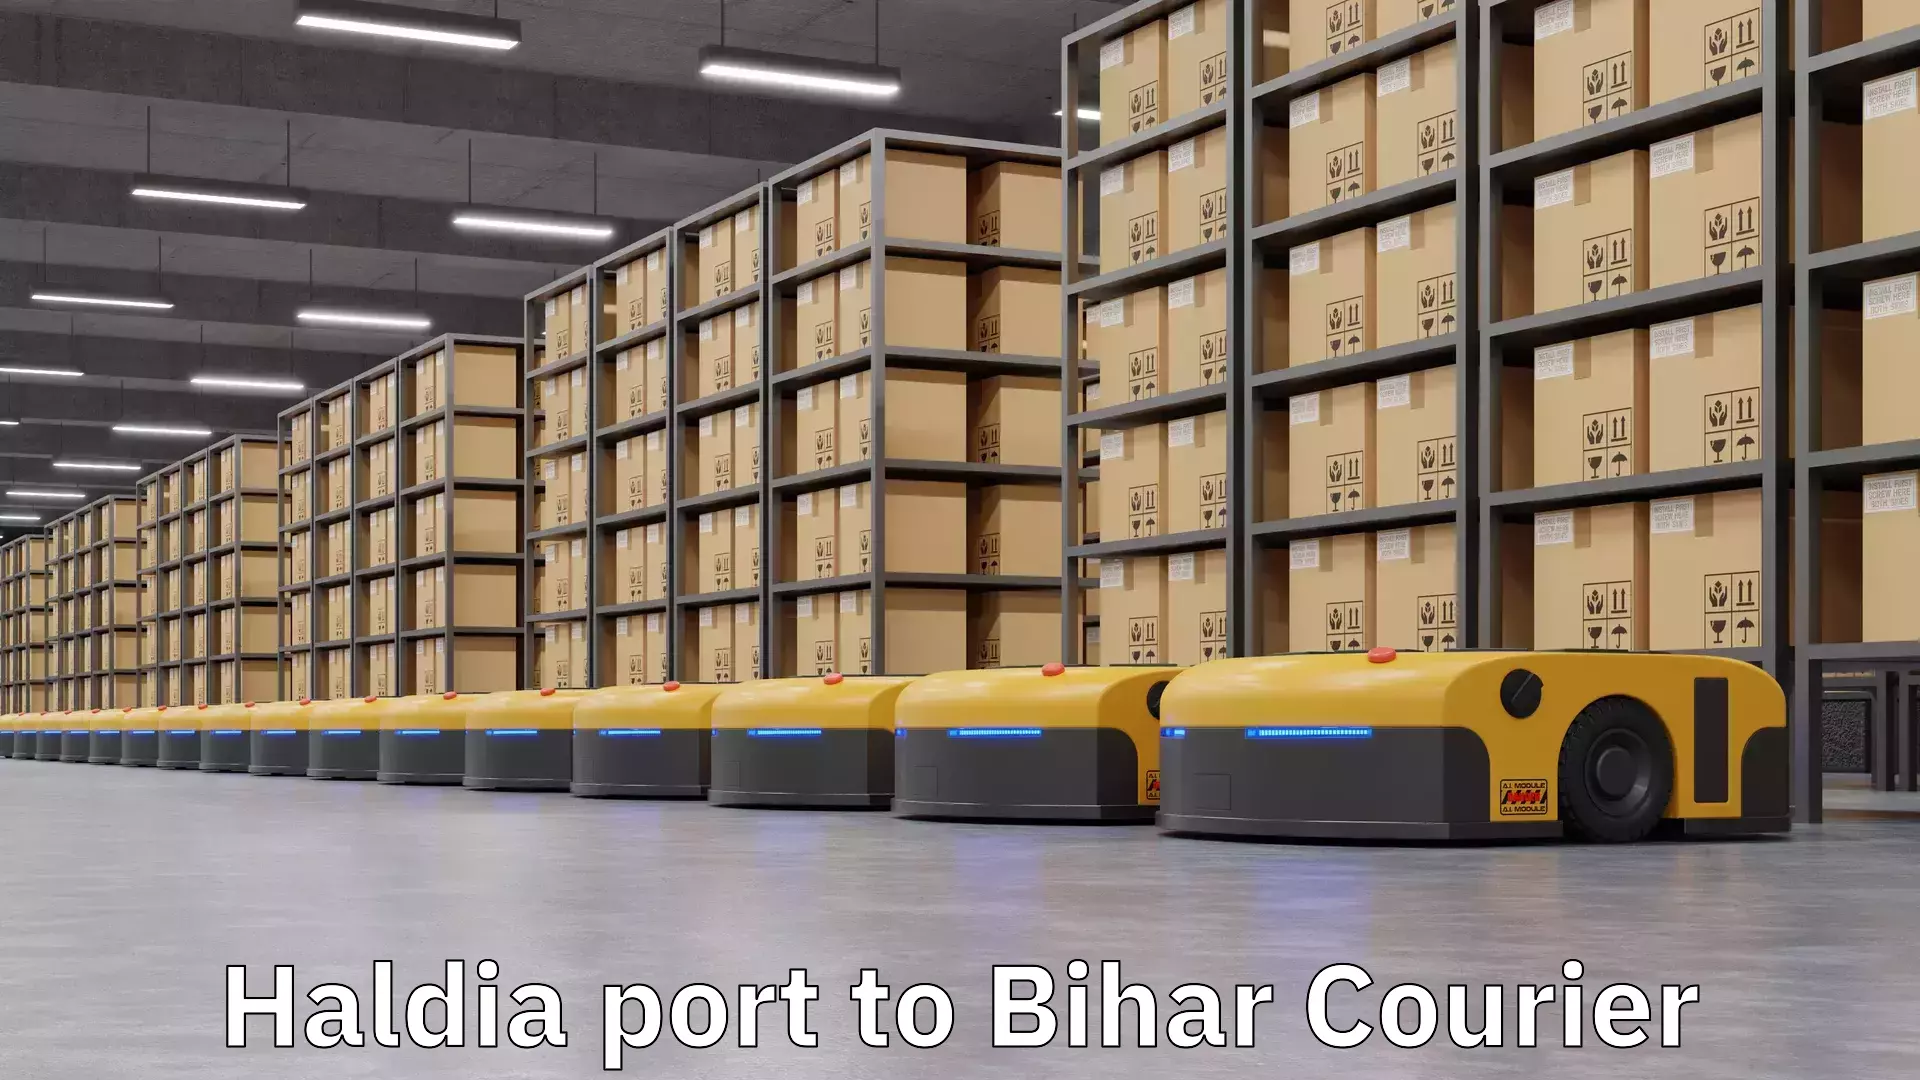 Nationwide courier service Haldia port to Bihar